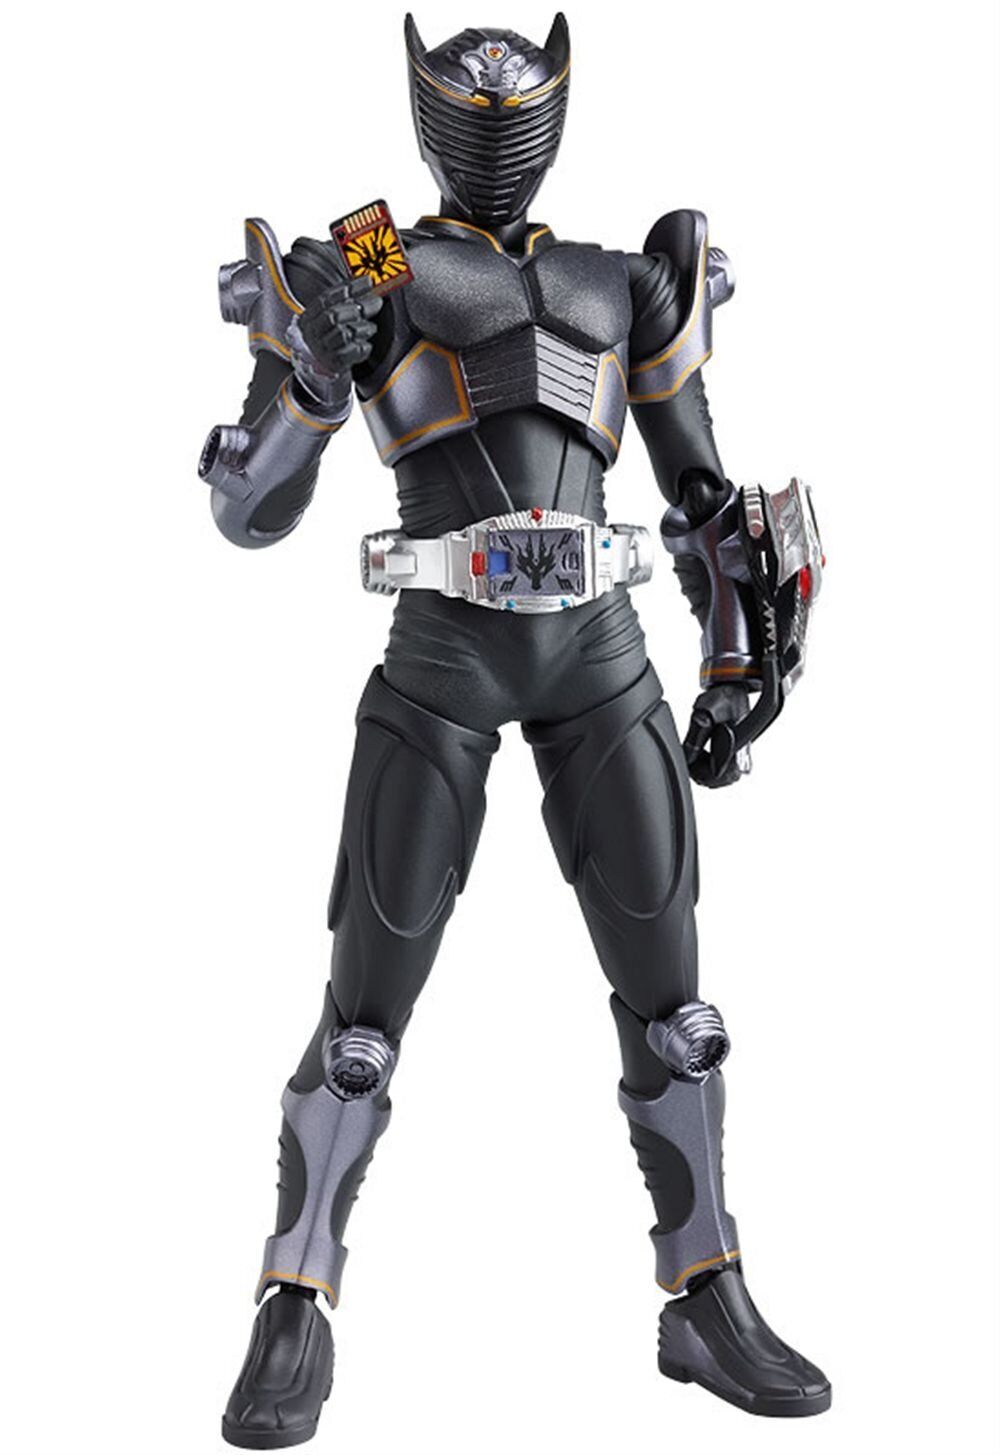 Max Factory figma Kamen Rider Onyx figma